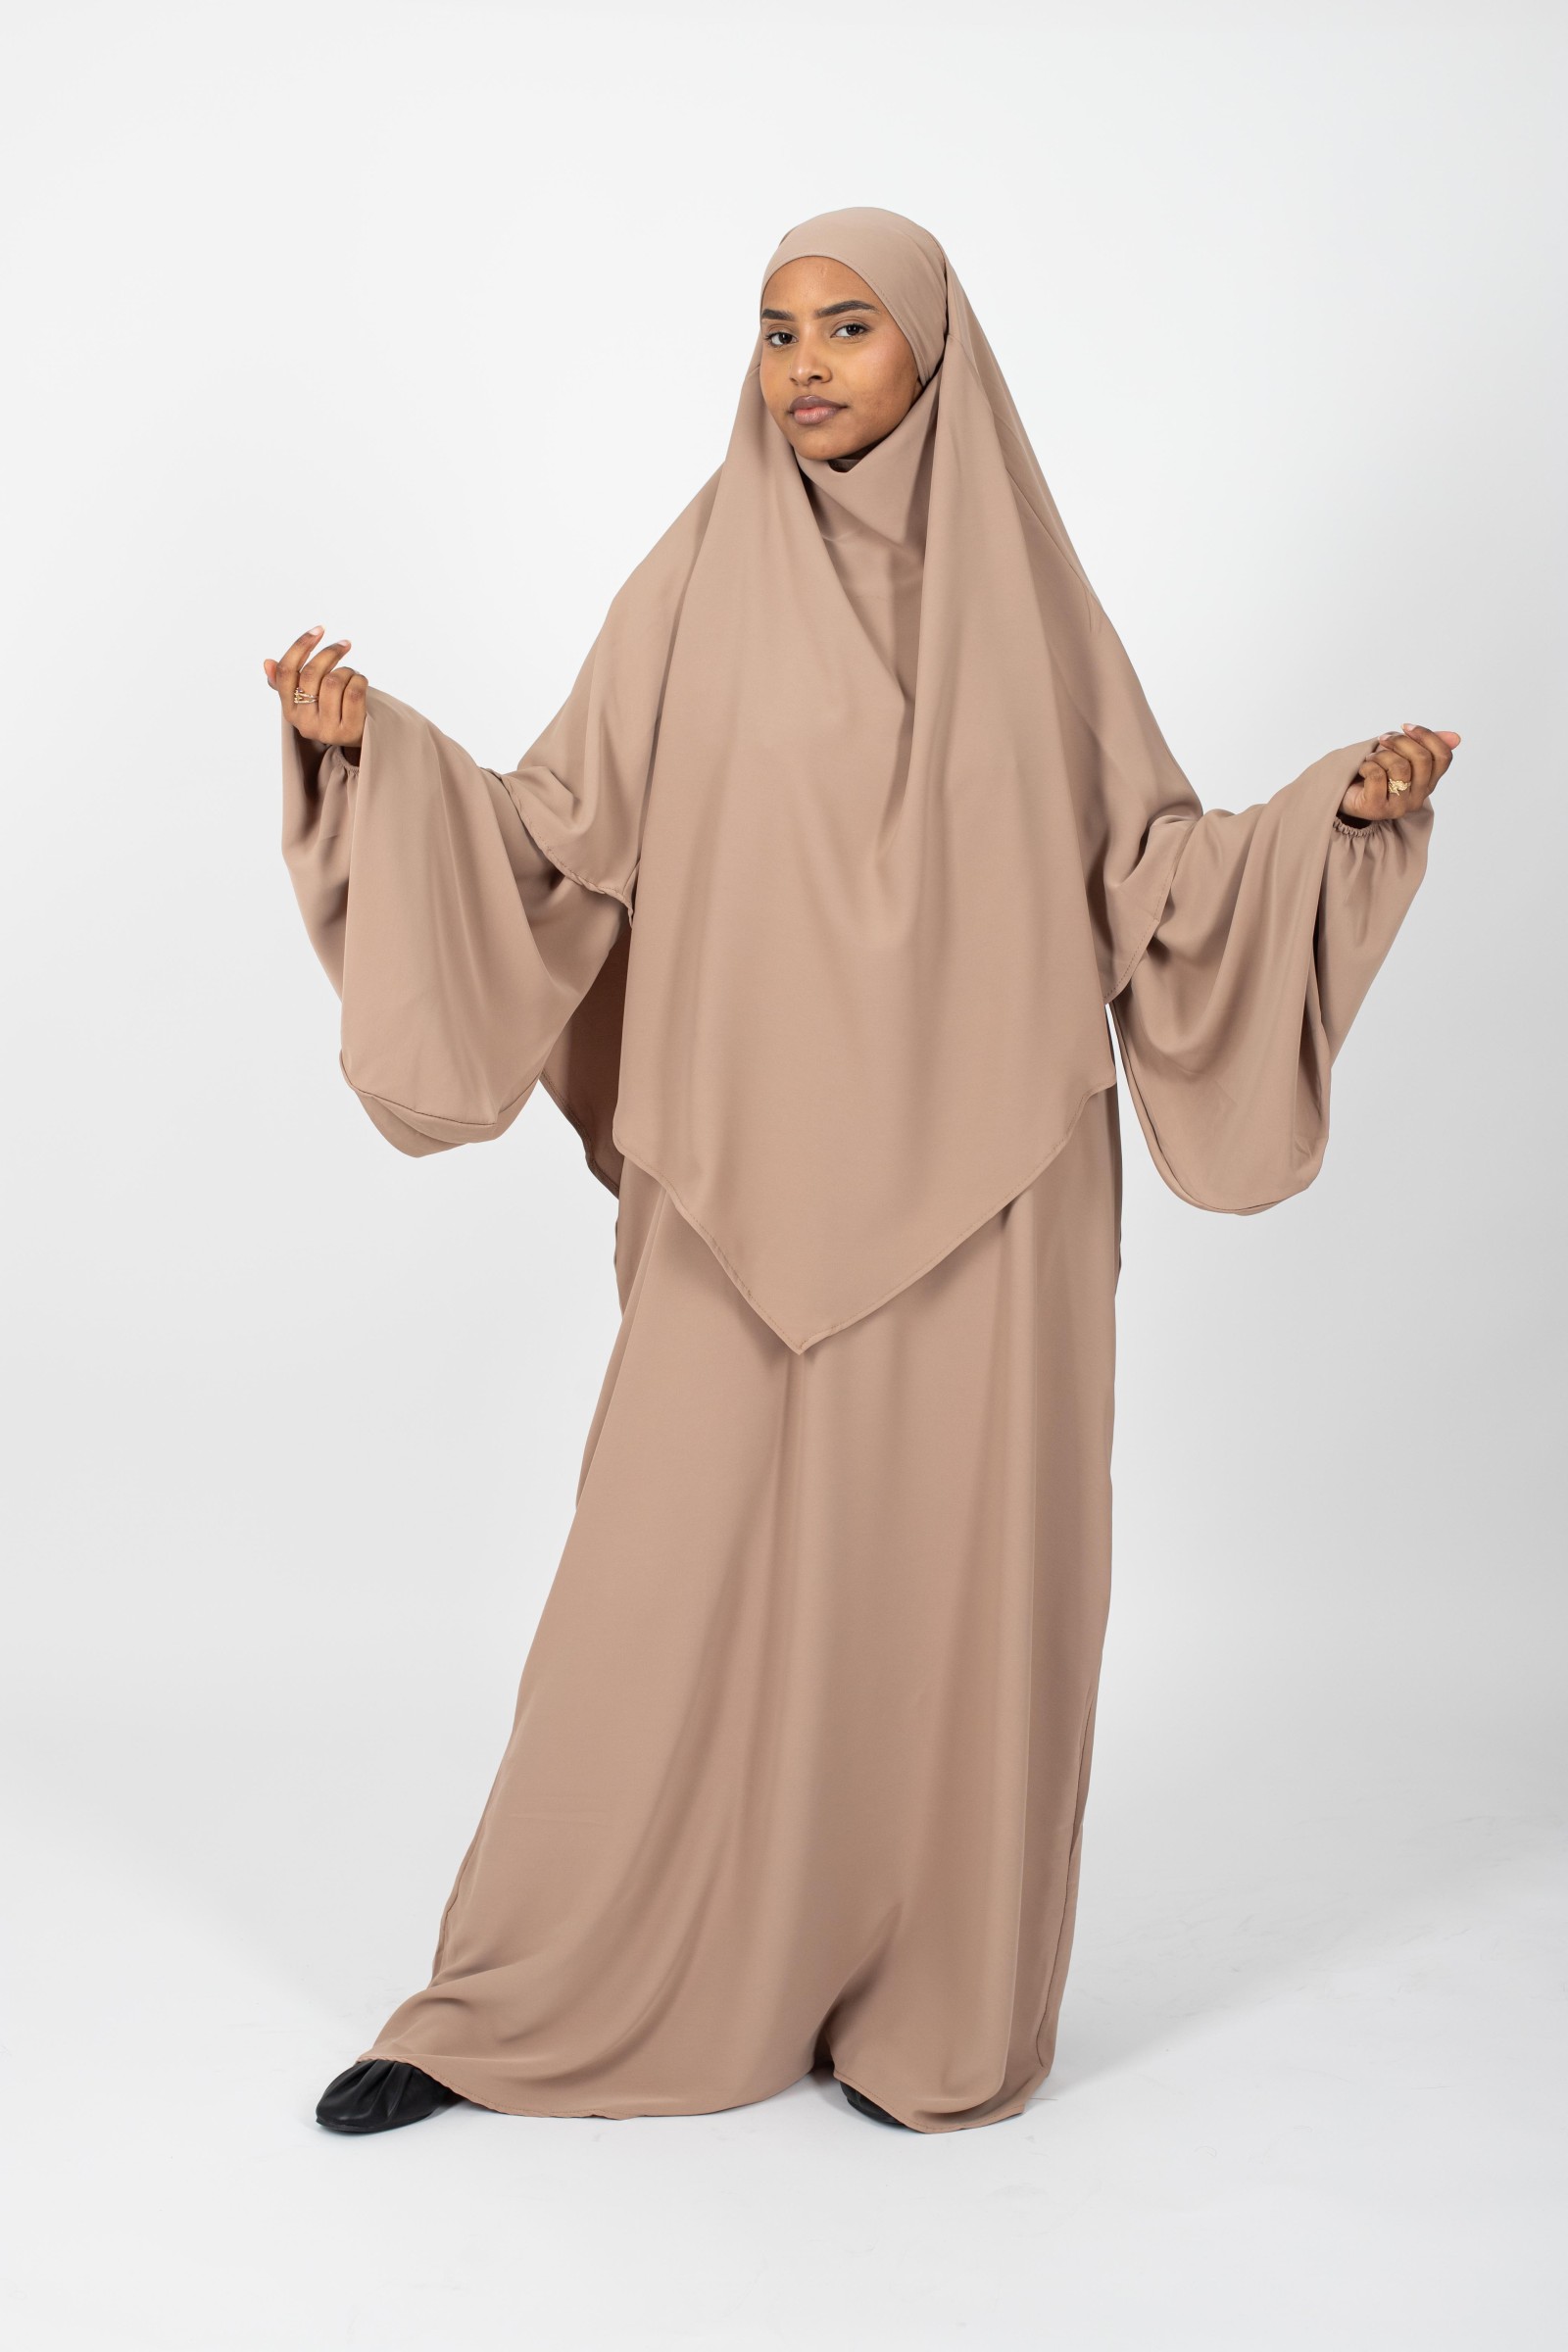 Abaya legislate for Muslim women with matching khimar